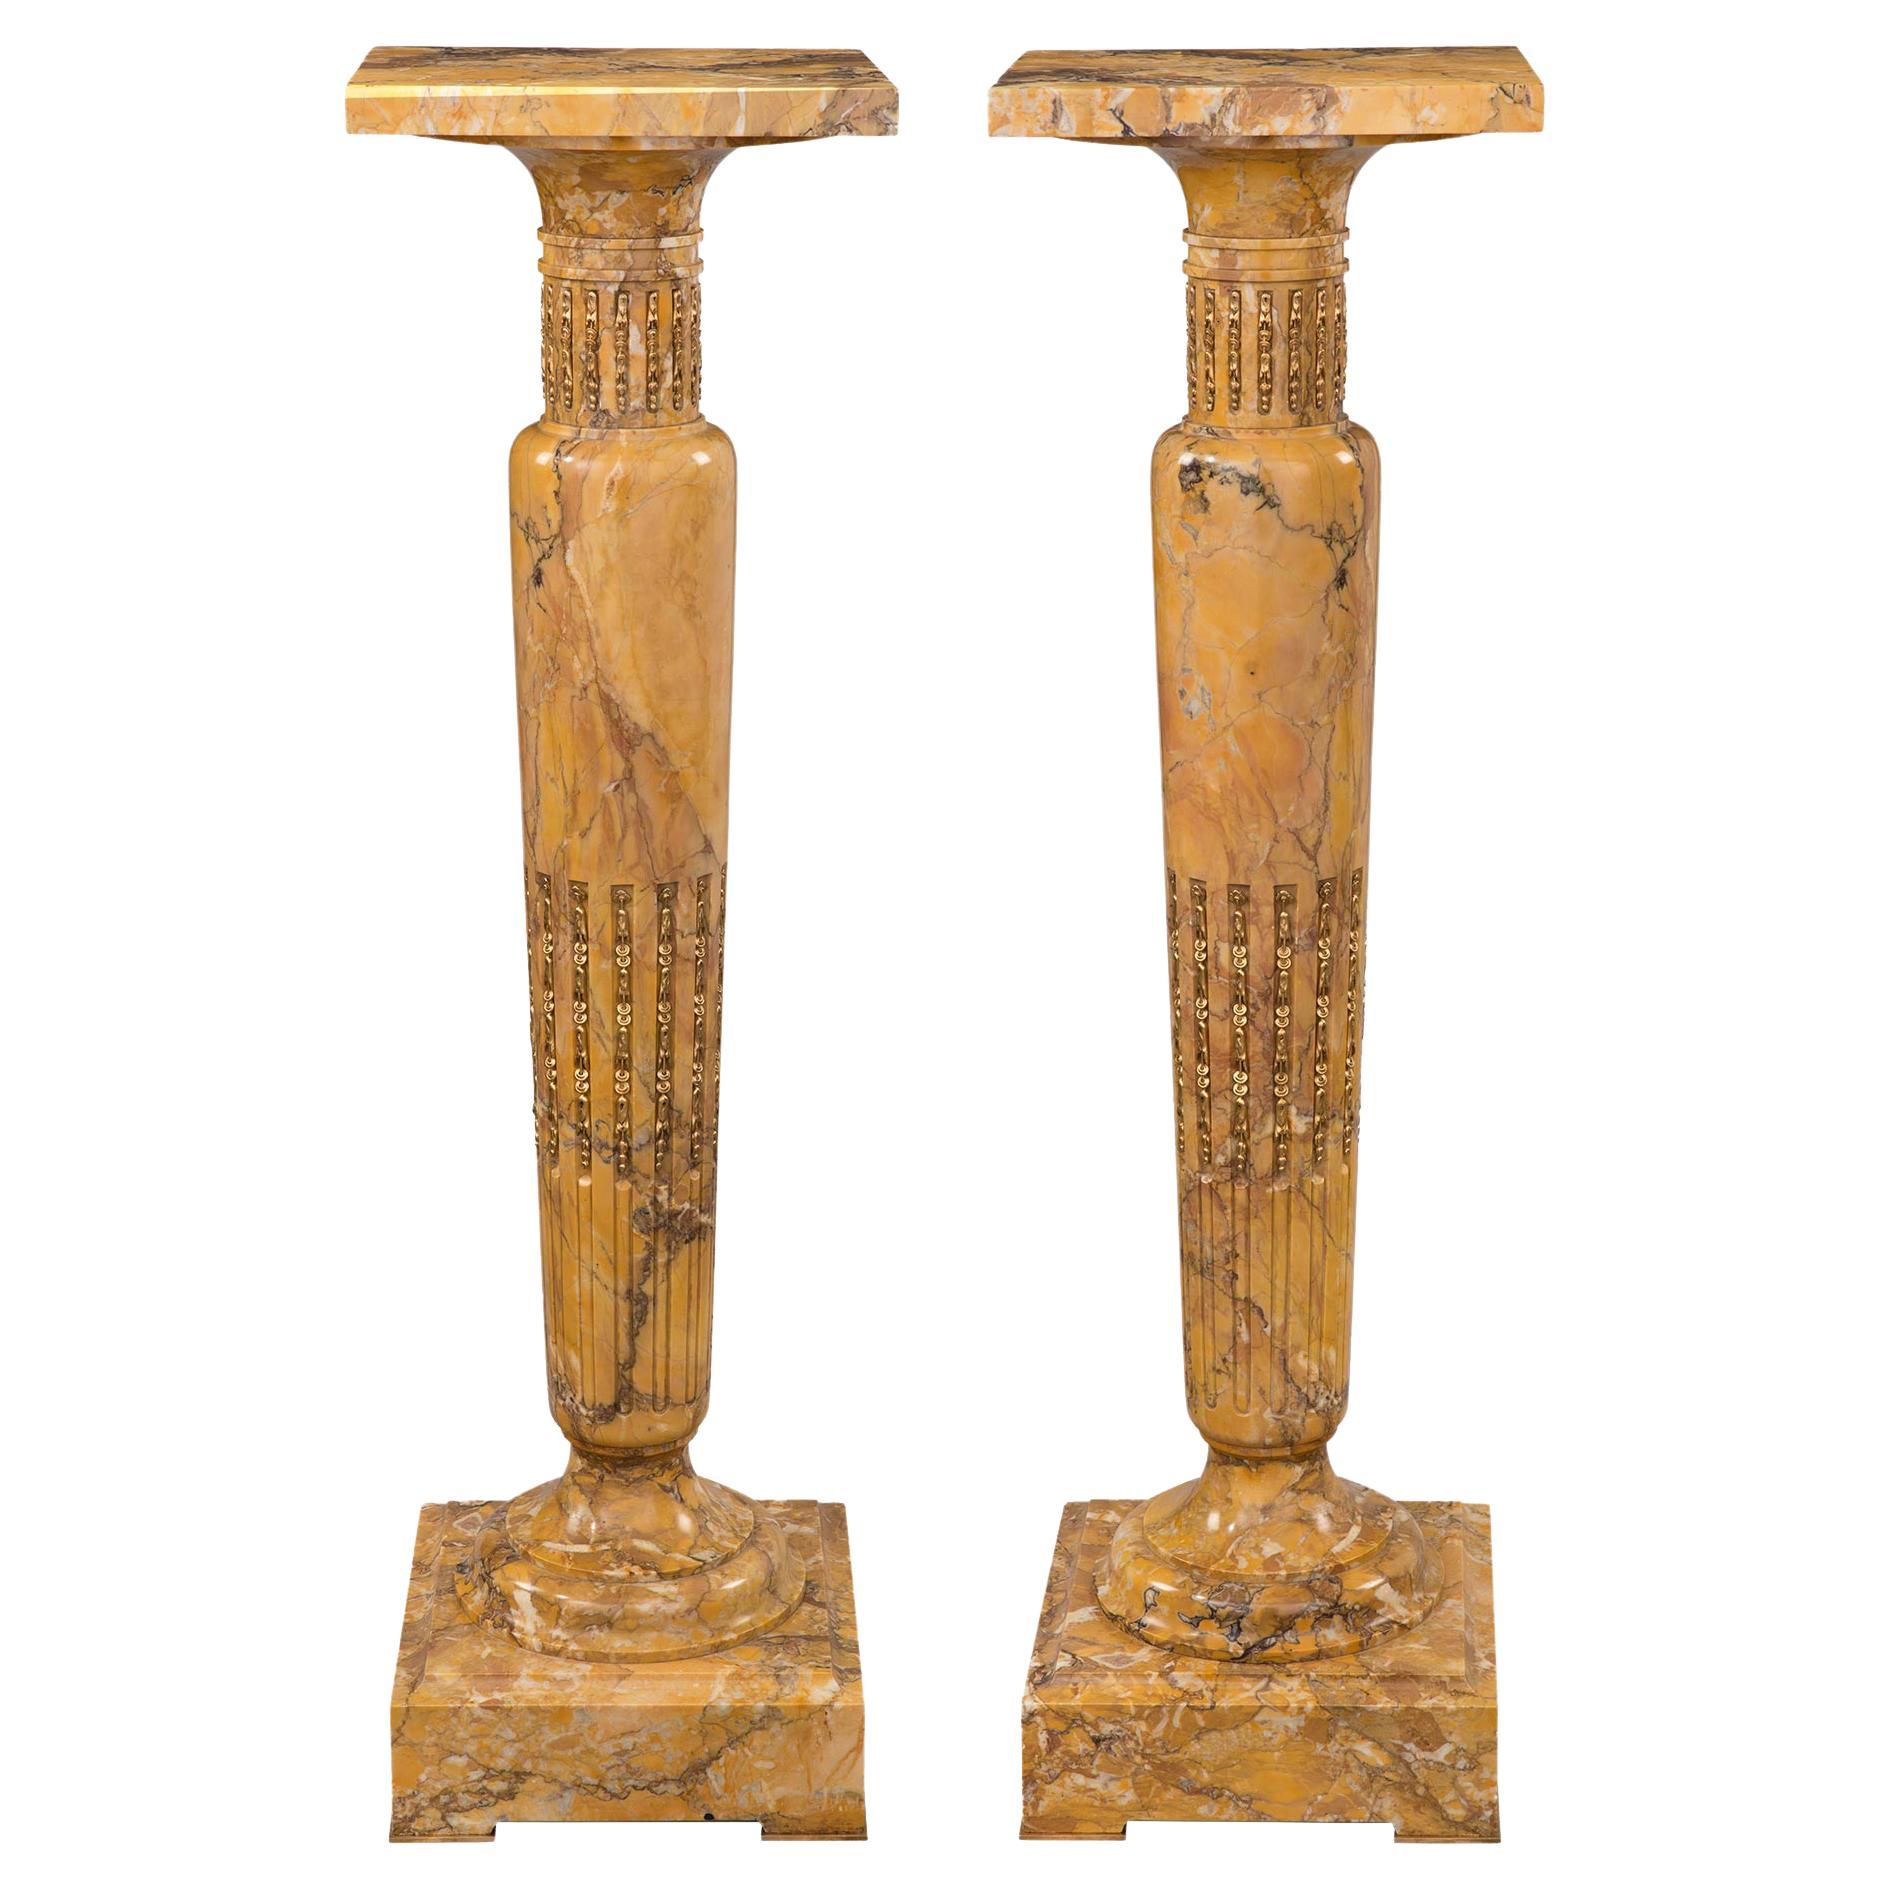 Pair of Italian Mid-19th Century Sienna Marble & Ormolu Mounted Pedestal Columns